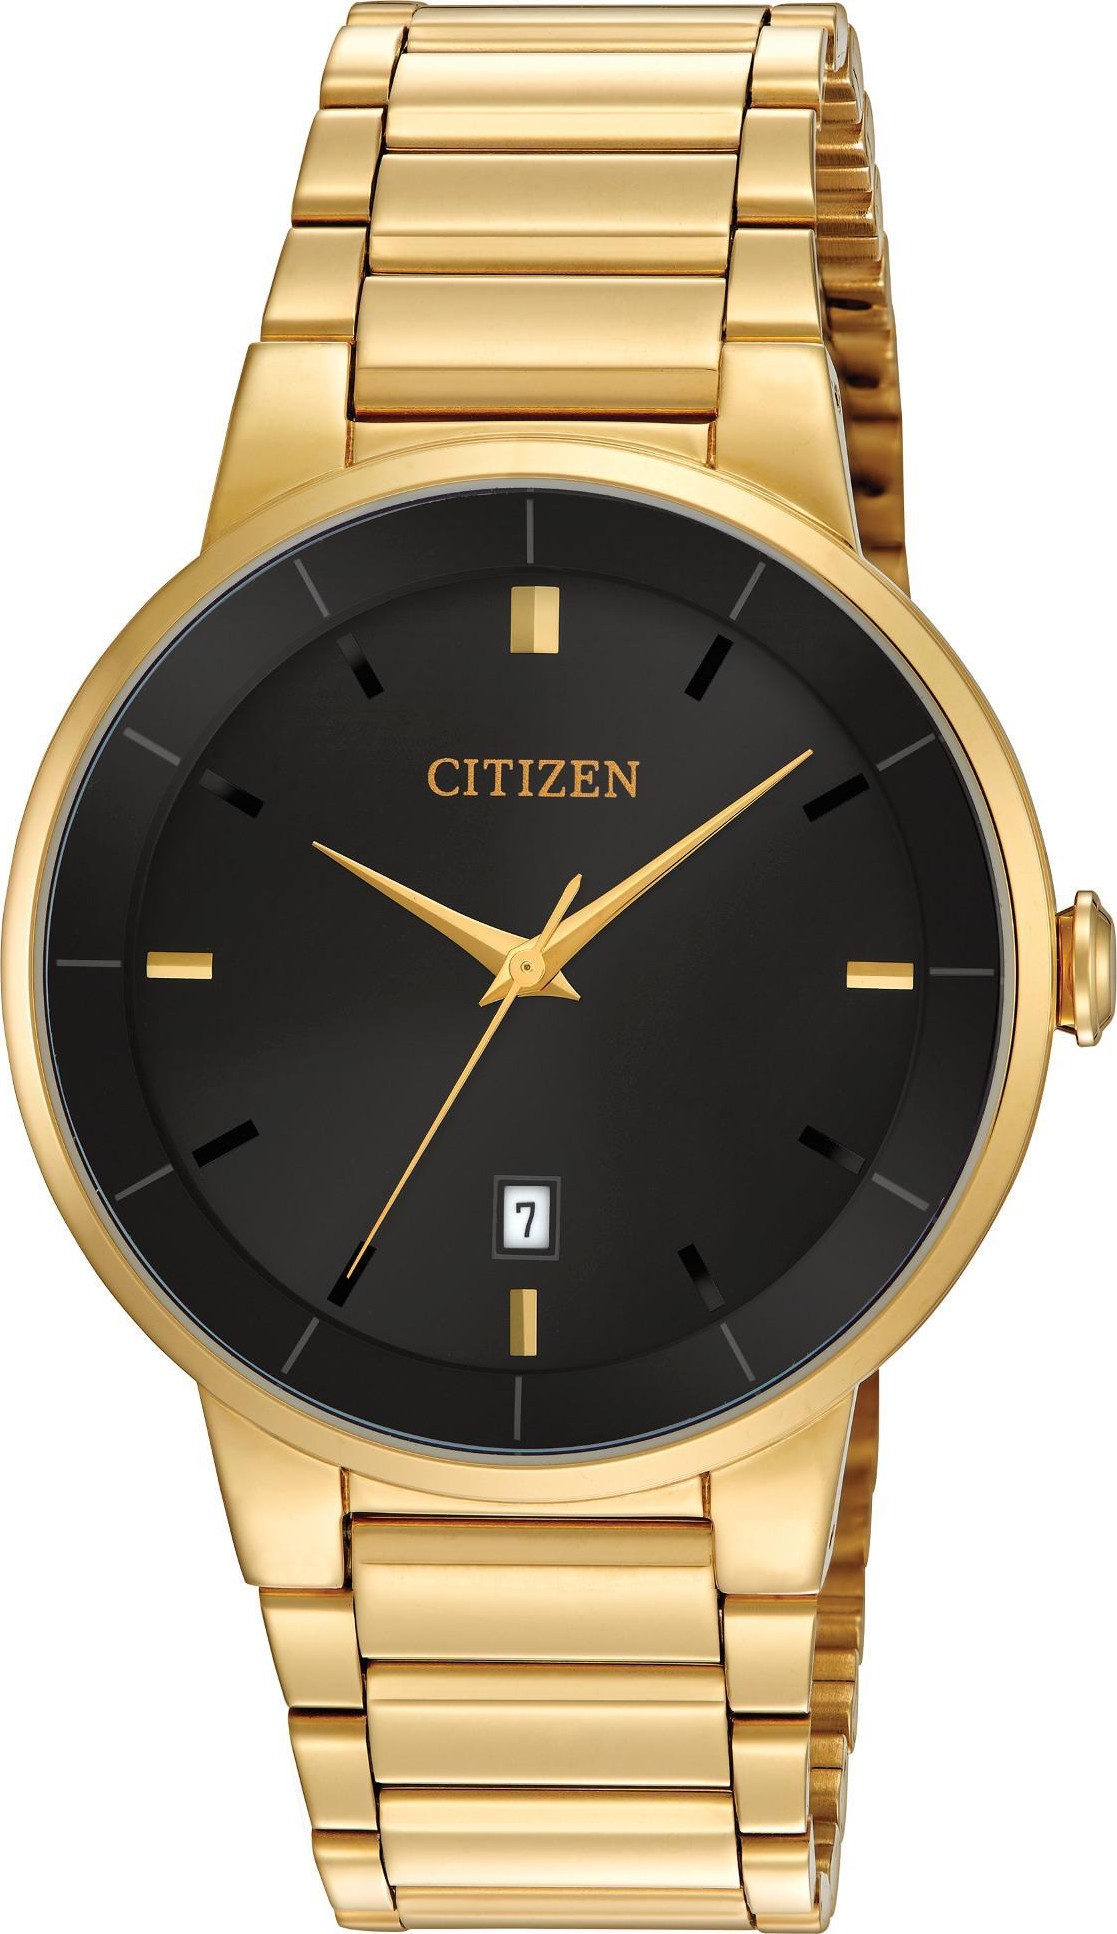 Total 40+ imagen citizen men’s quartz watch